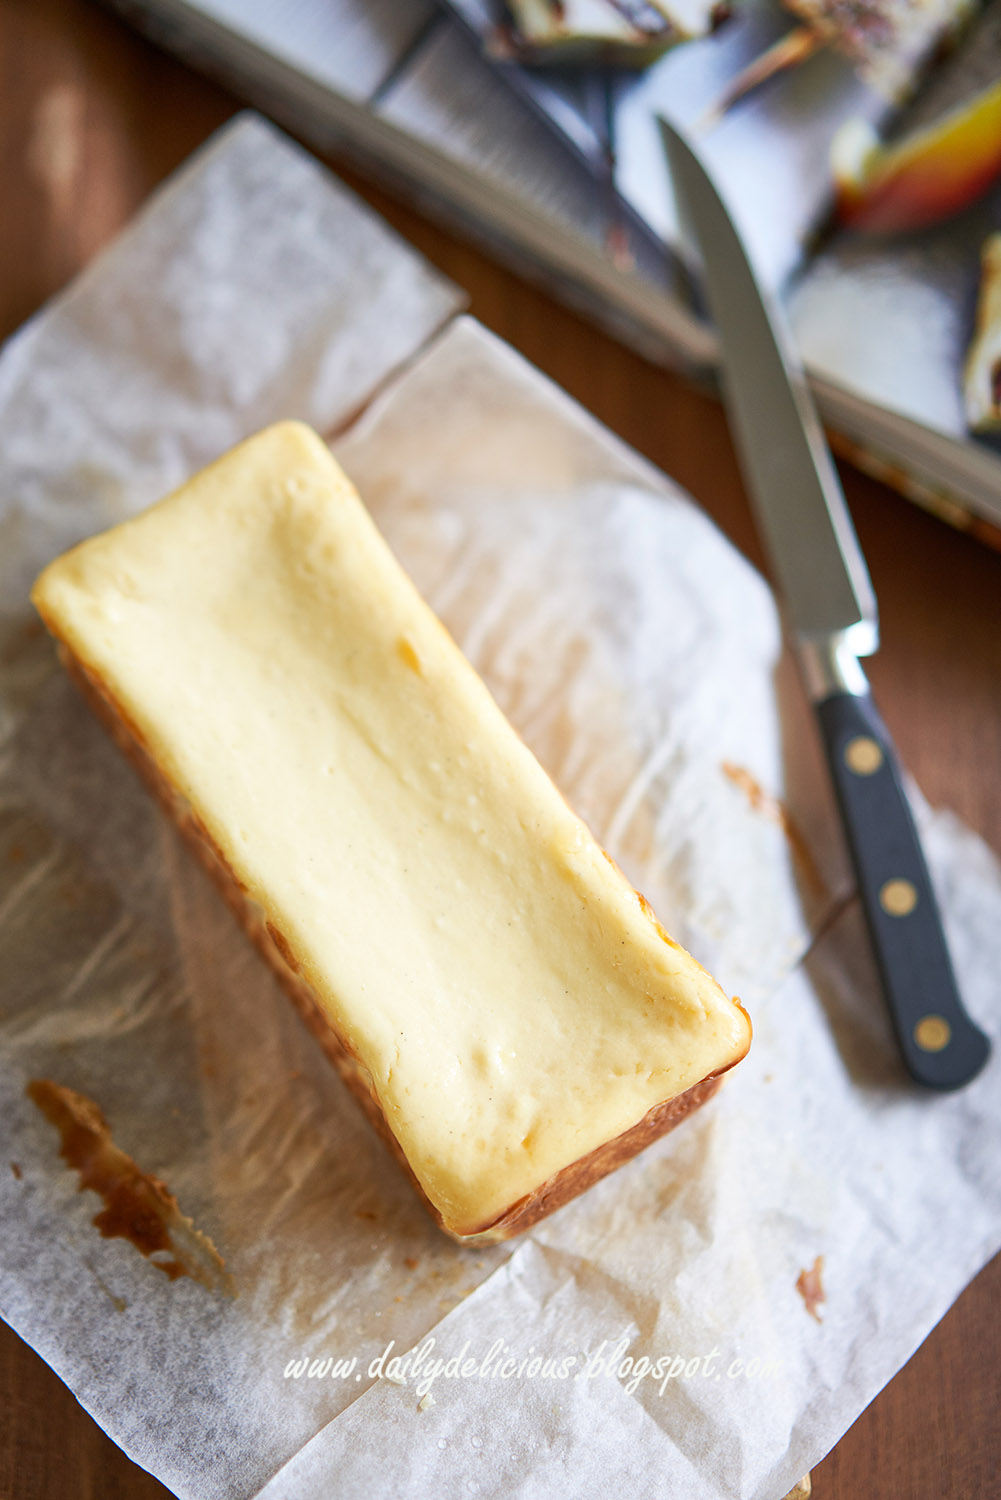 dailydelicious: Parmesan Cheesecake